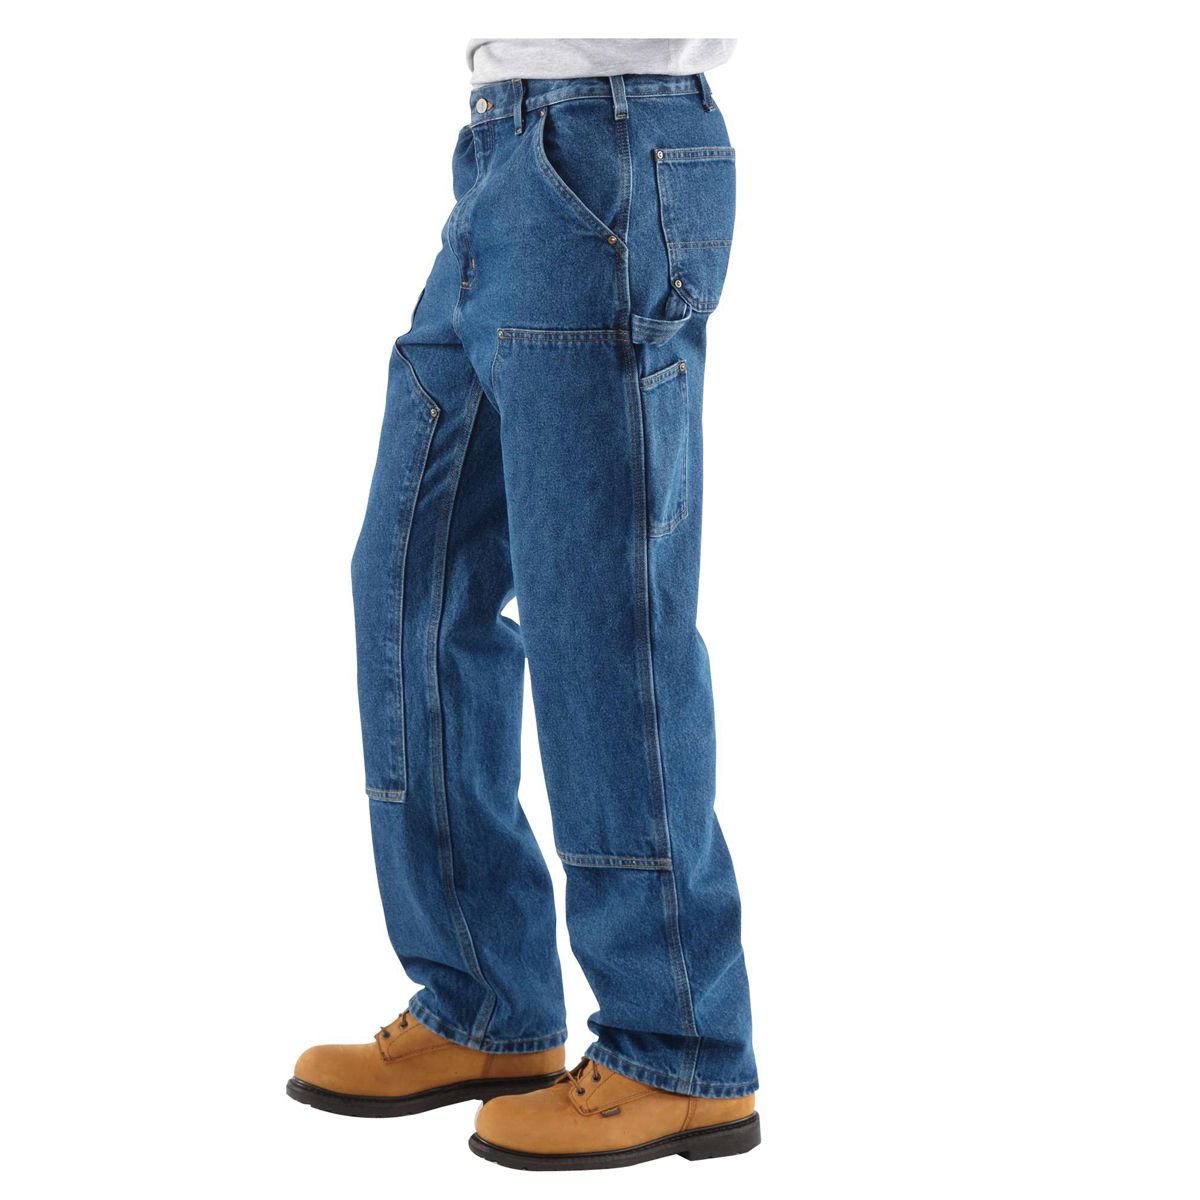 Carhartt B73-DST-40X30 Utility Logger Jeans, 40 in Waist, 30 in L Inseam, Darkstone, Loose Fit - 8